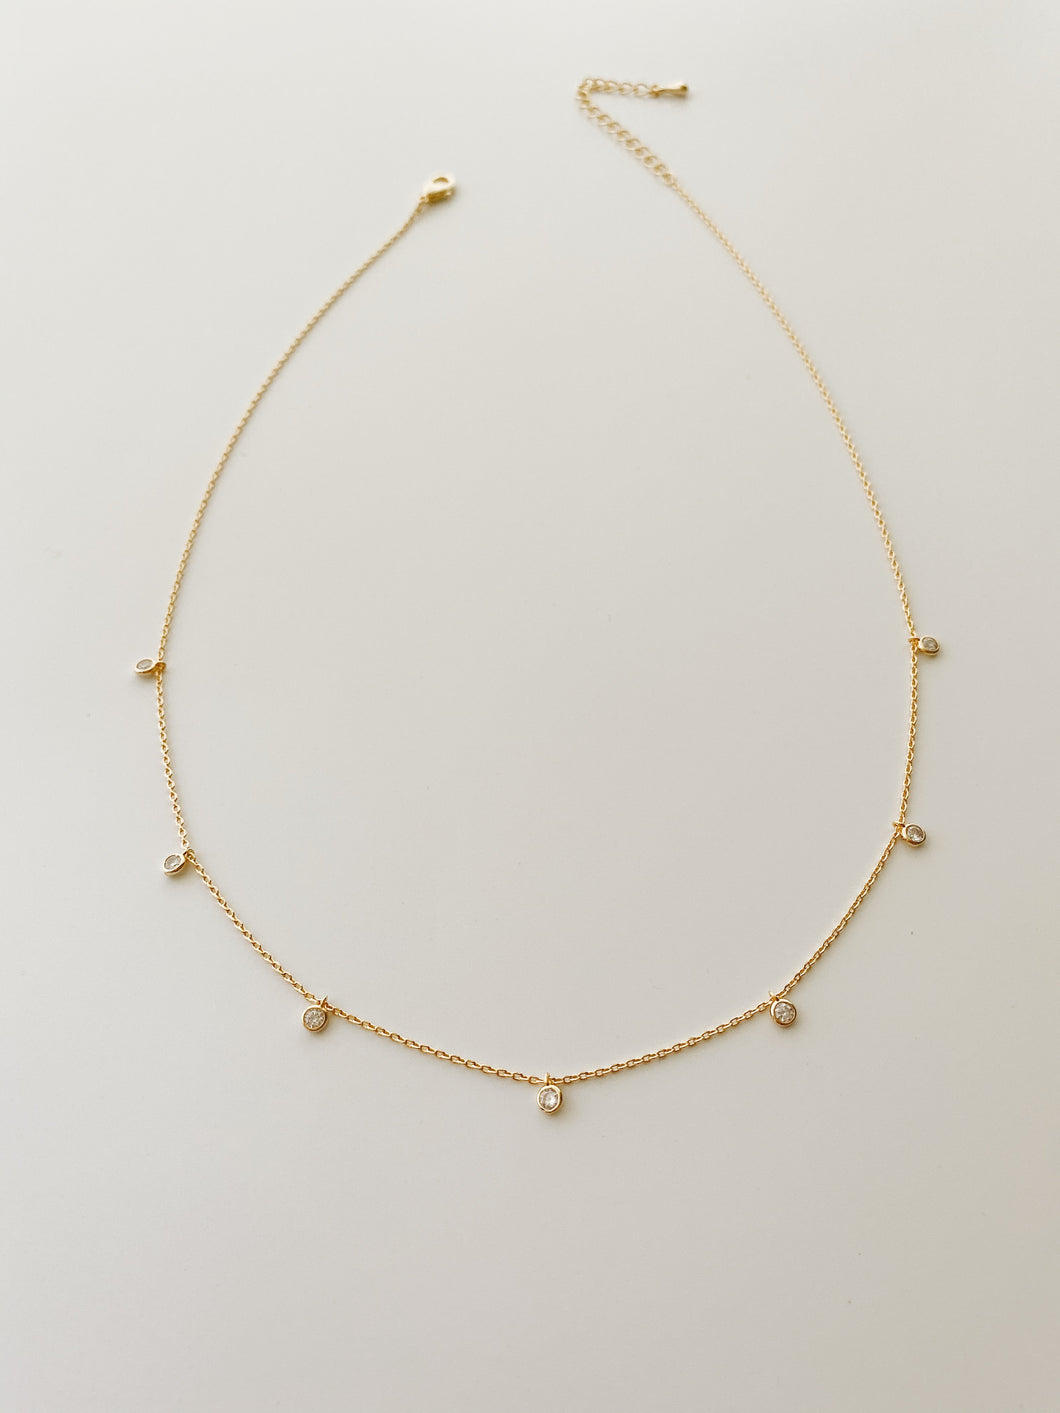 Gold bezel-set CZ necklace